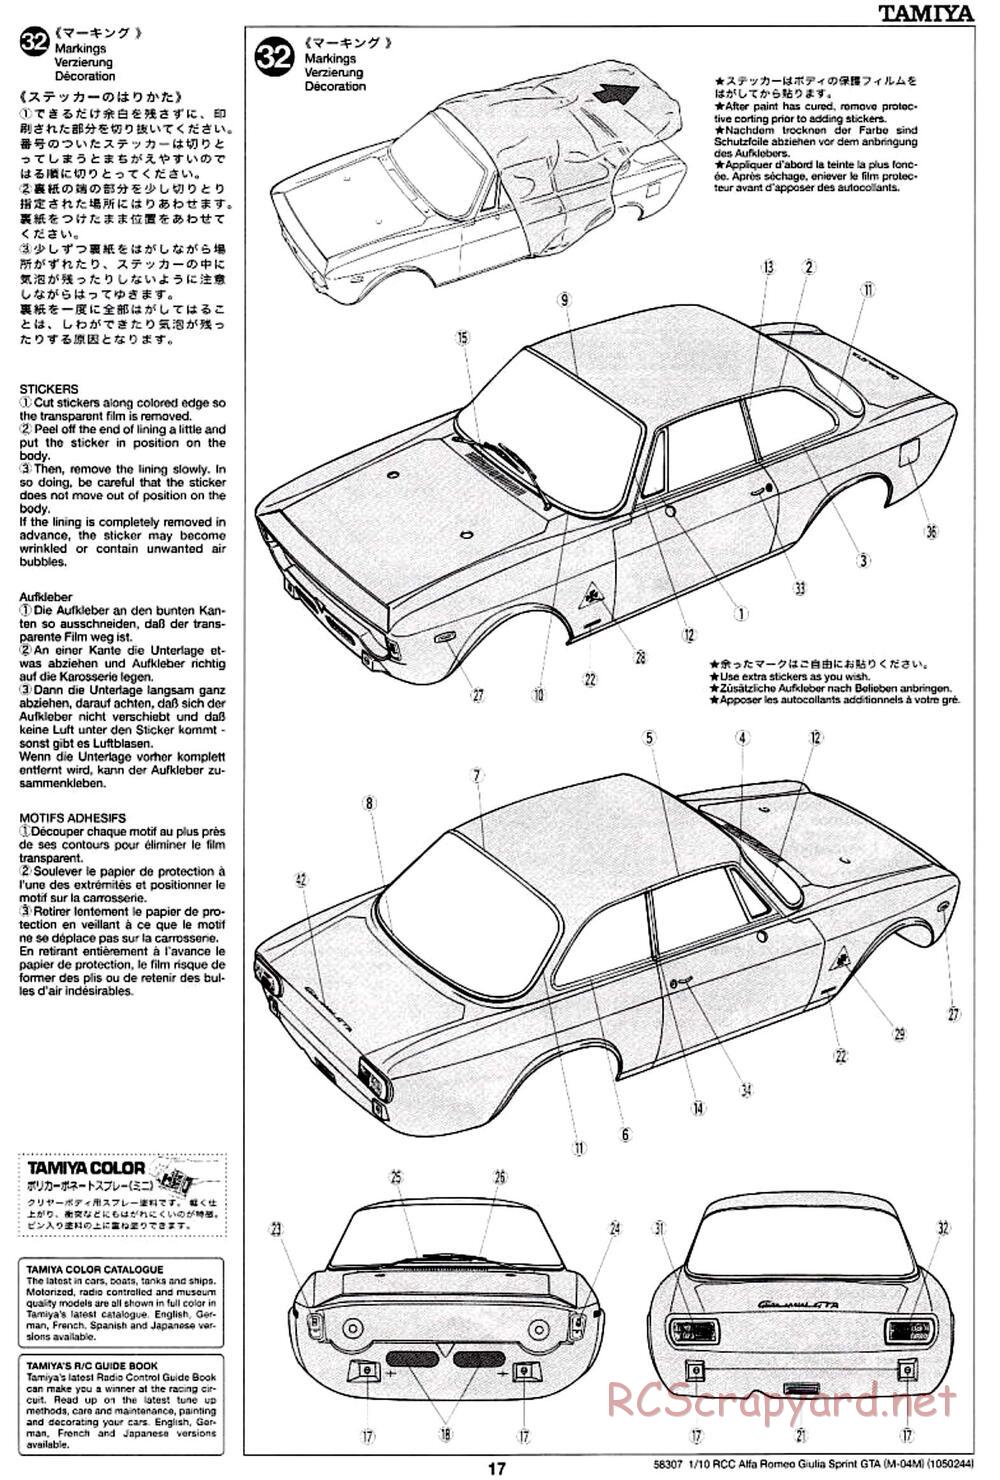 Tamiya - Alfa Romeo Giulia Sprint GTA - M04M Chassis - Manual - Page 17